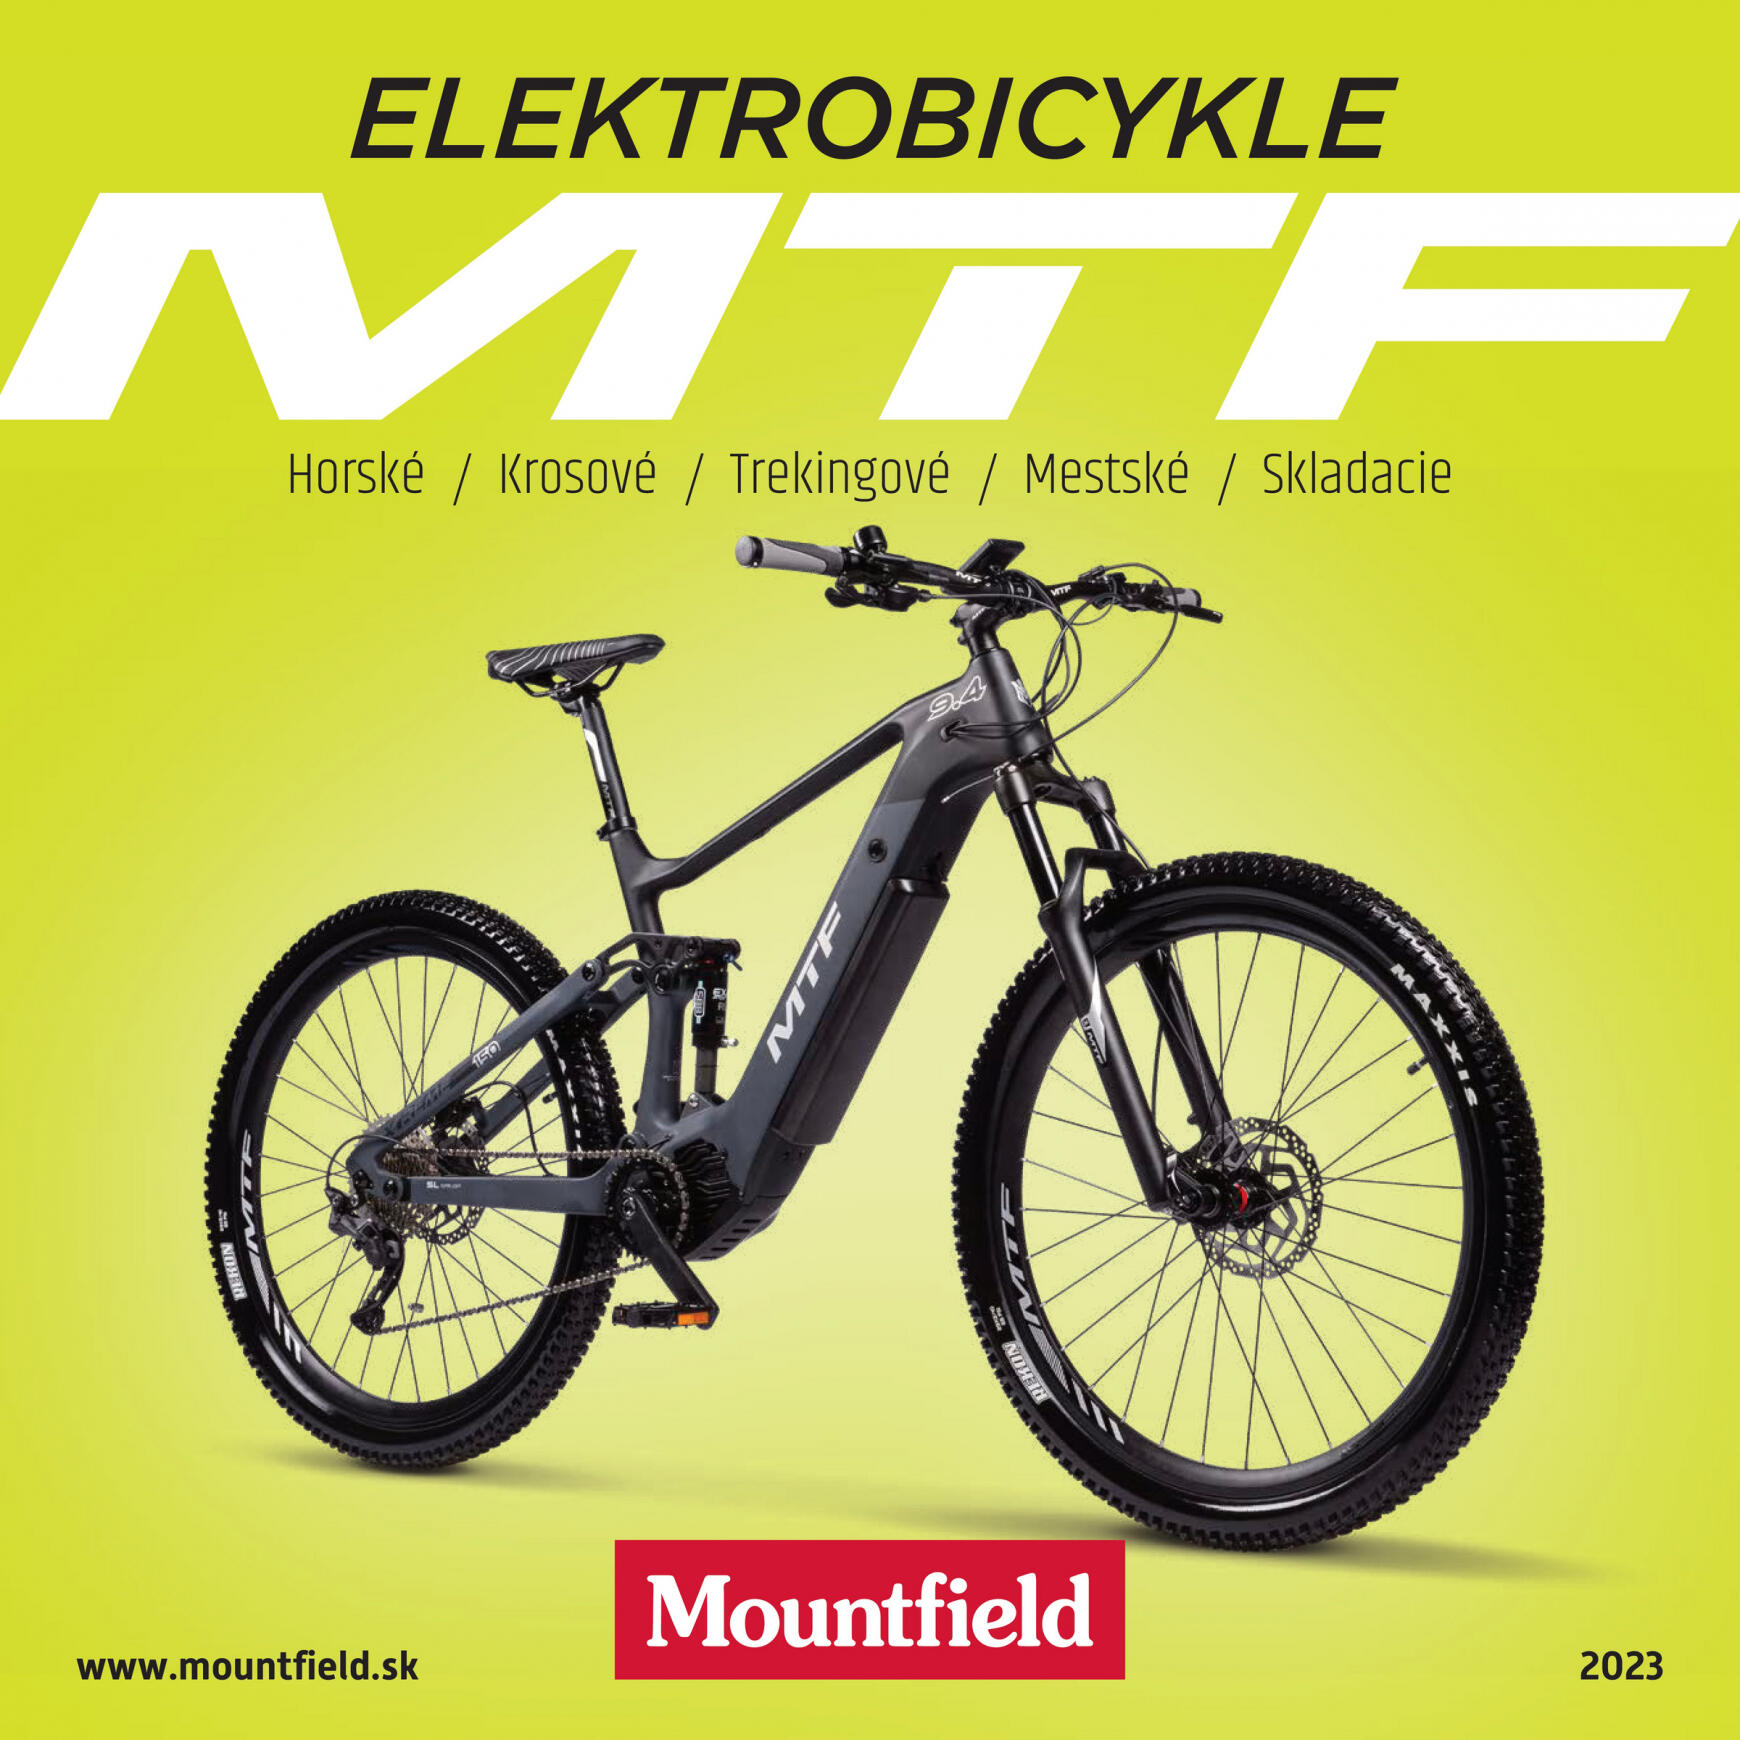 mountfield - Mountfield - Katalóg elektrobicyklov